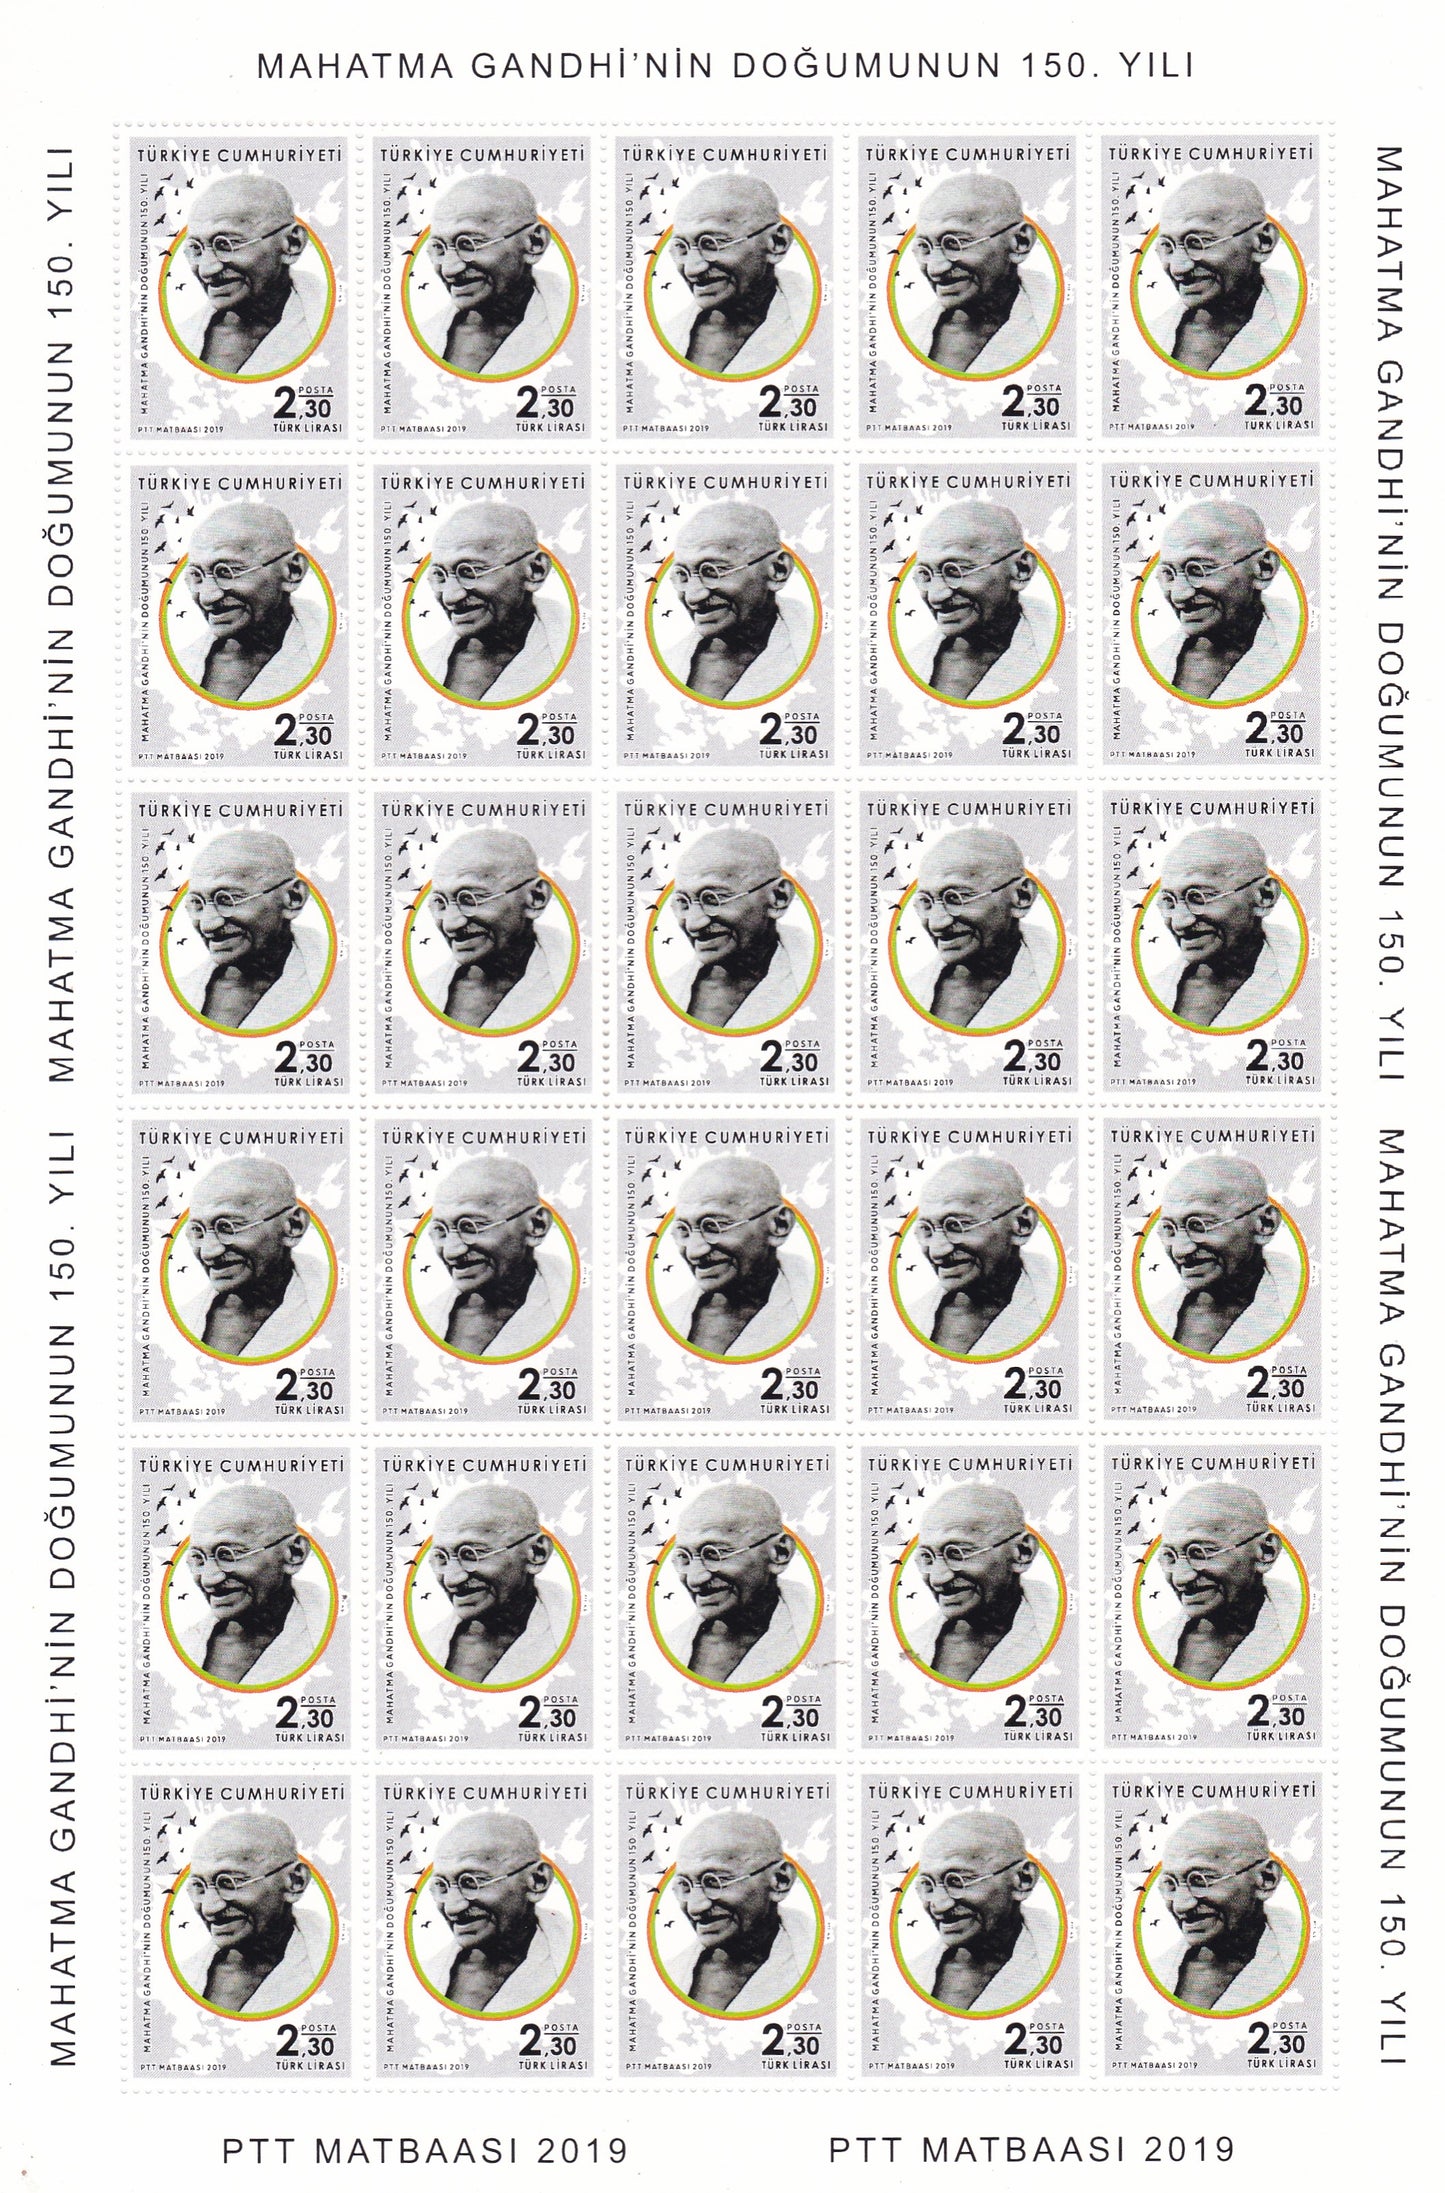 Turkey-Gandhi 2019 Full unfolded sheet of 30 stamps.